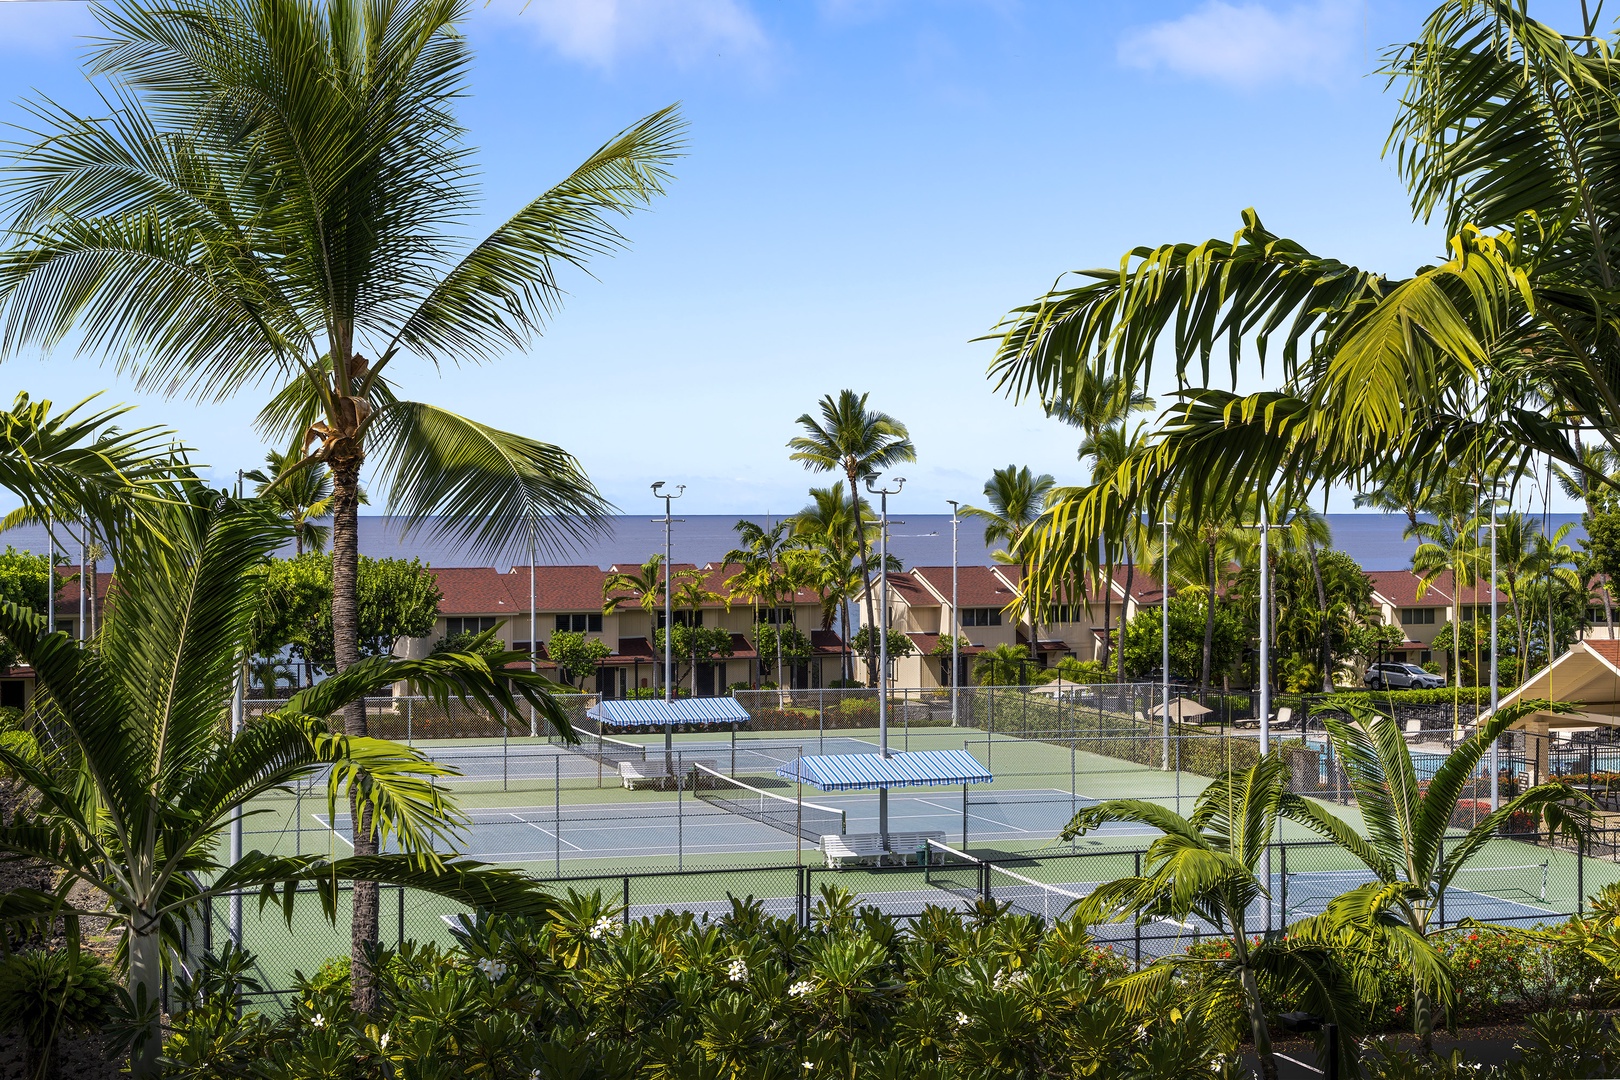 Kailua Kona Vacation Rentals, Keauhou Kona Surf & Racquet 9303 - Overlooking the tennis courts from the condos Lanai